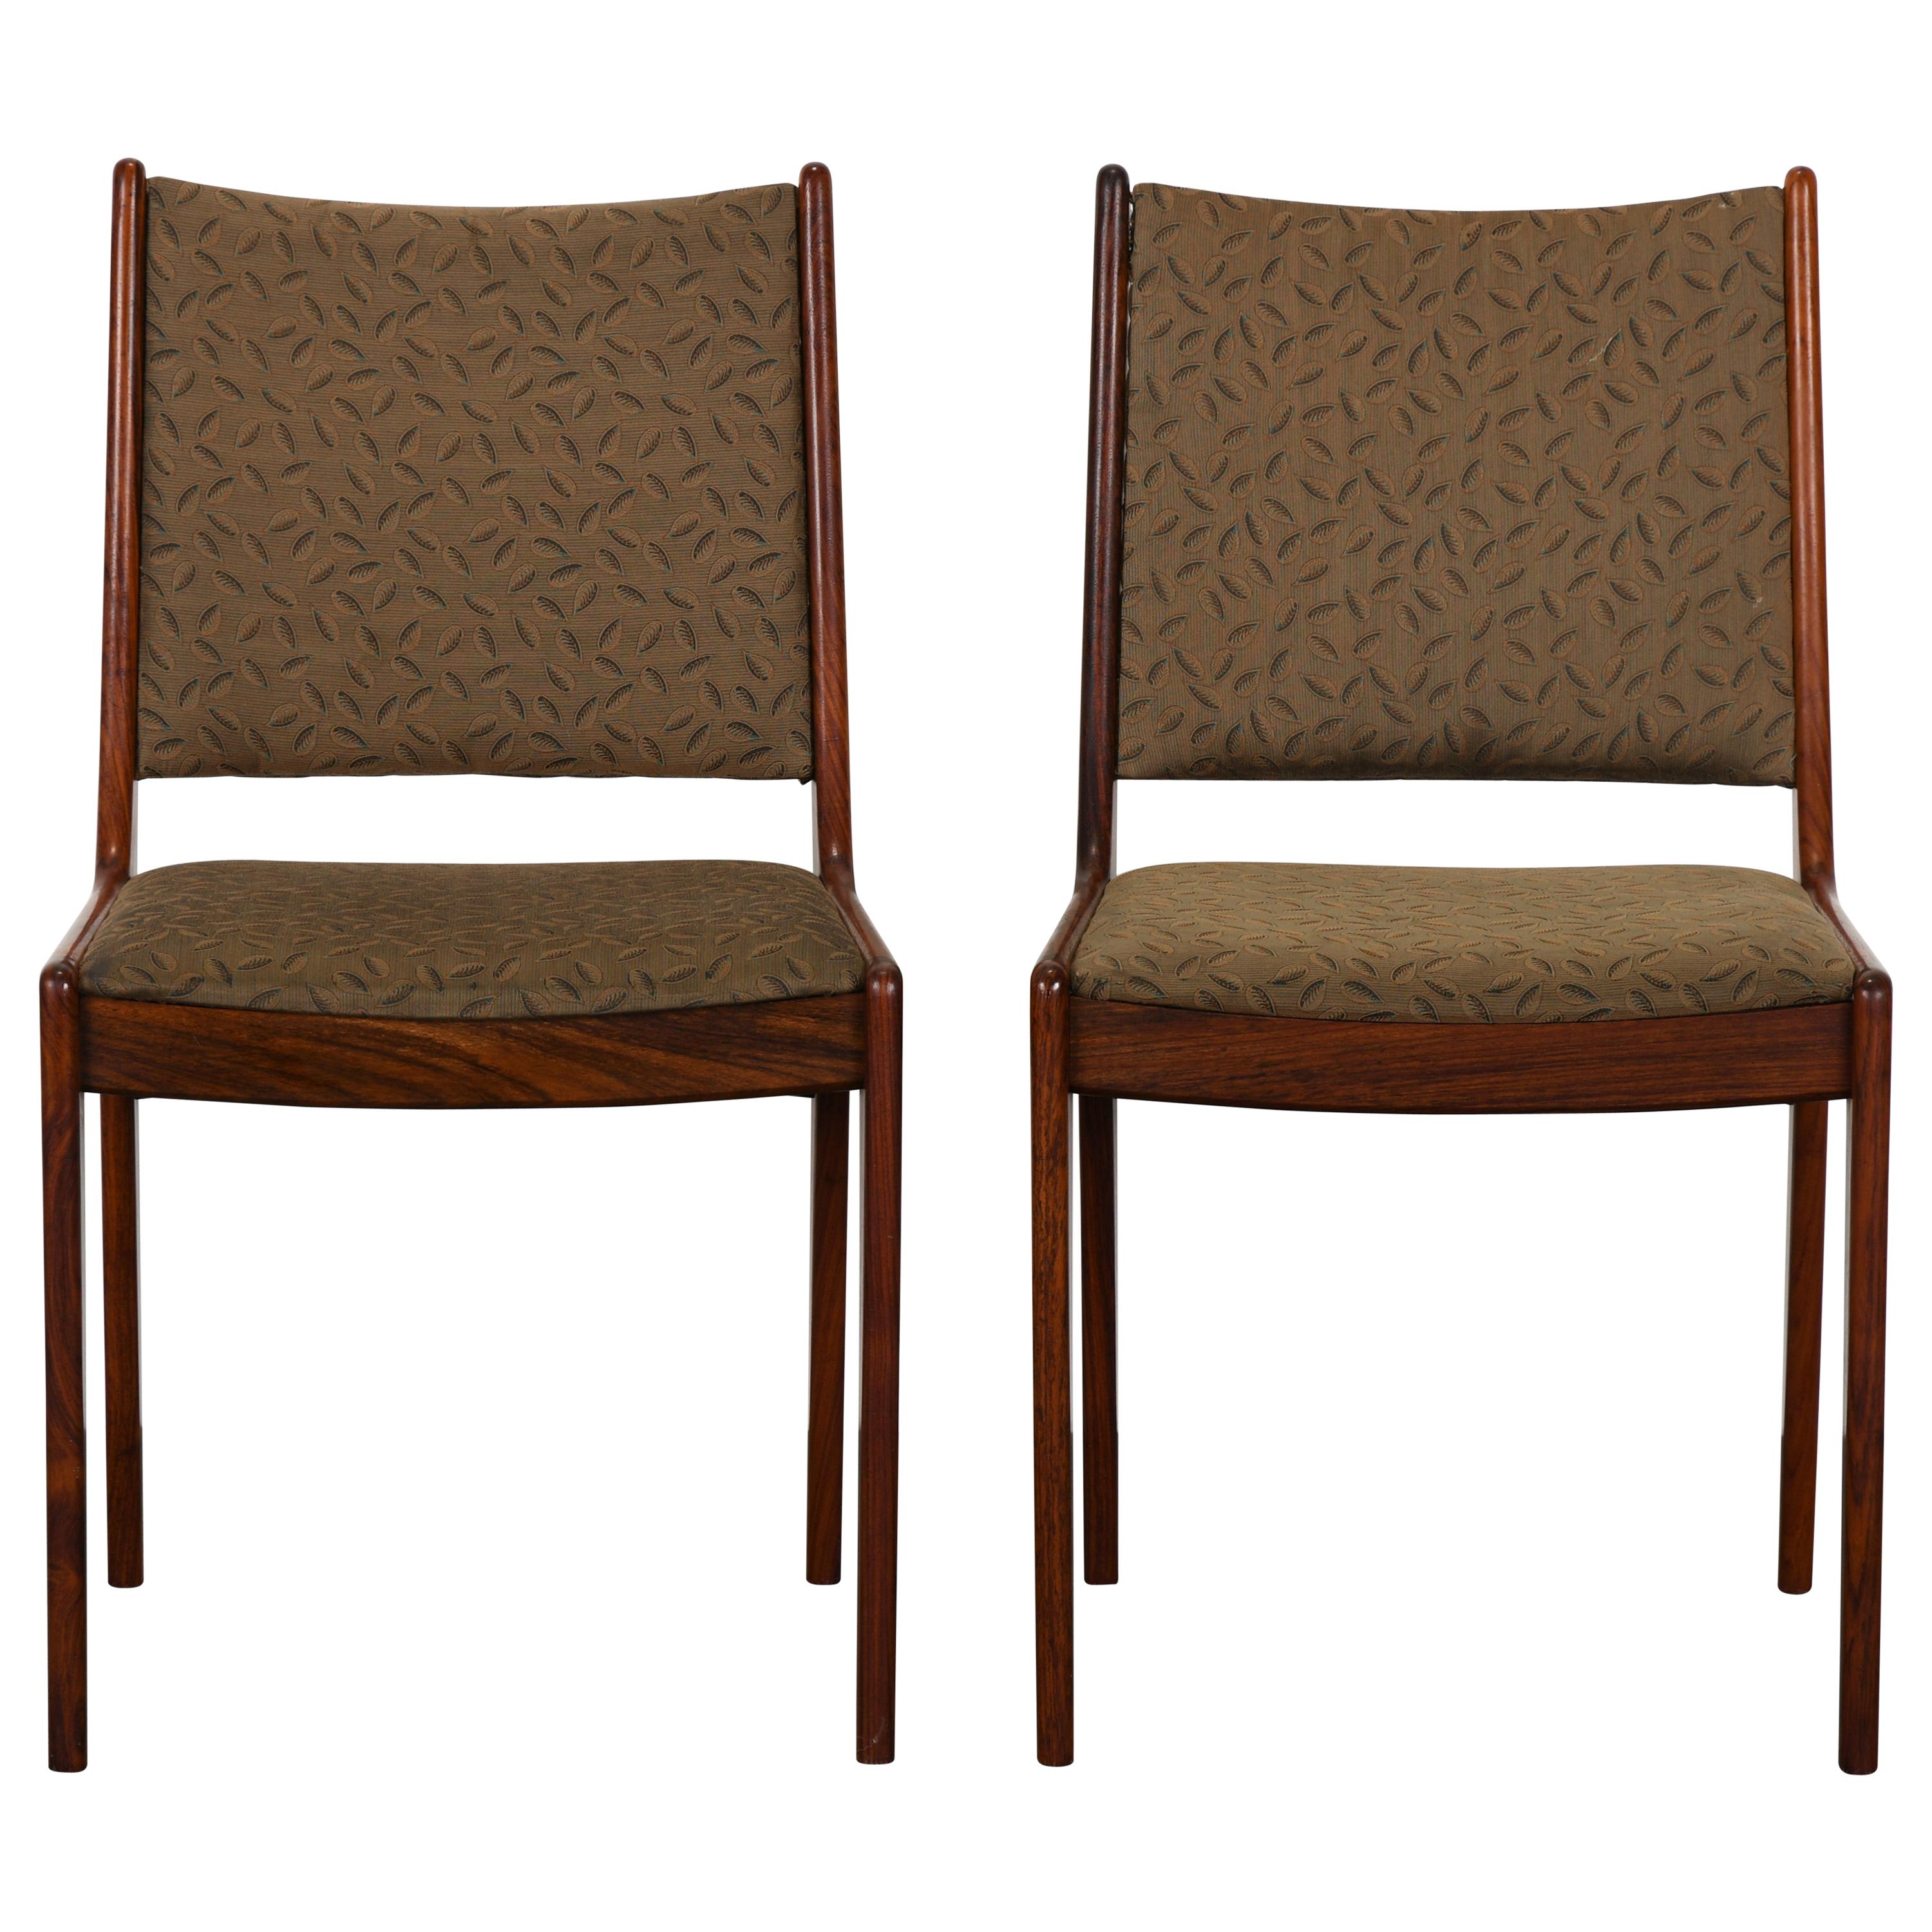 Pair of Danish Rosewood Chairs by Johannes Andersen for Uldum Mobelfabrik, 1960s